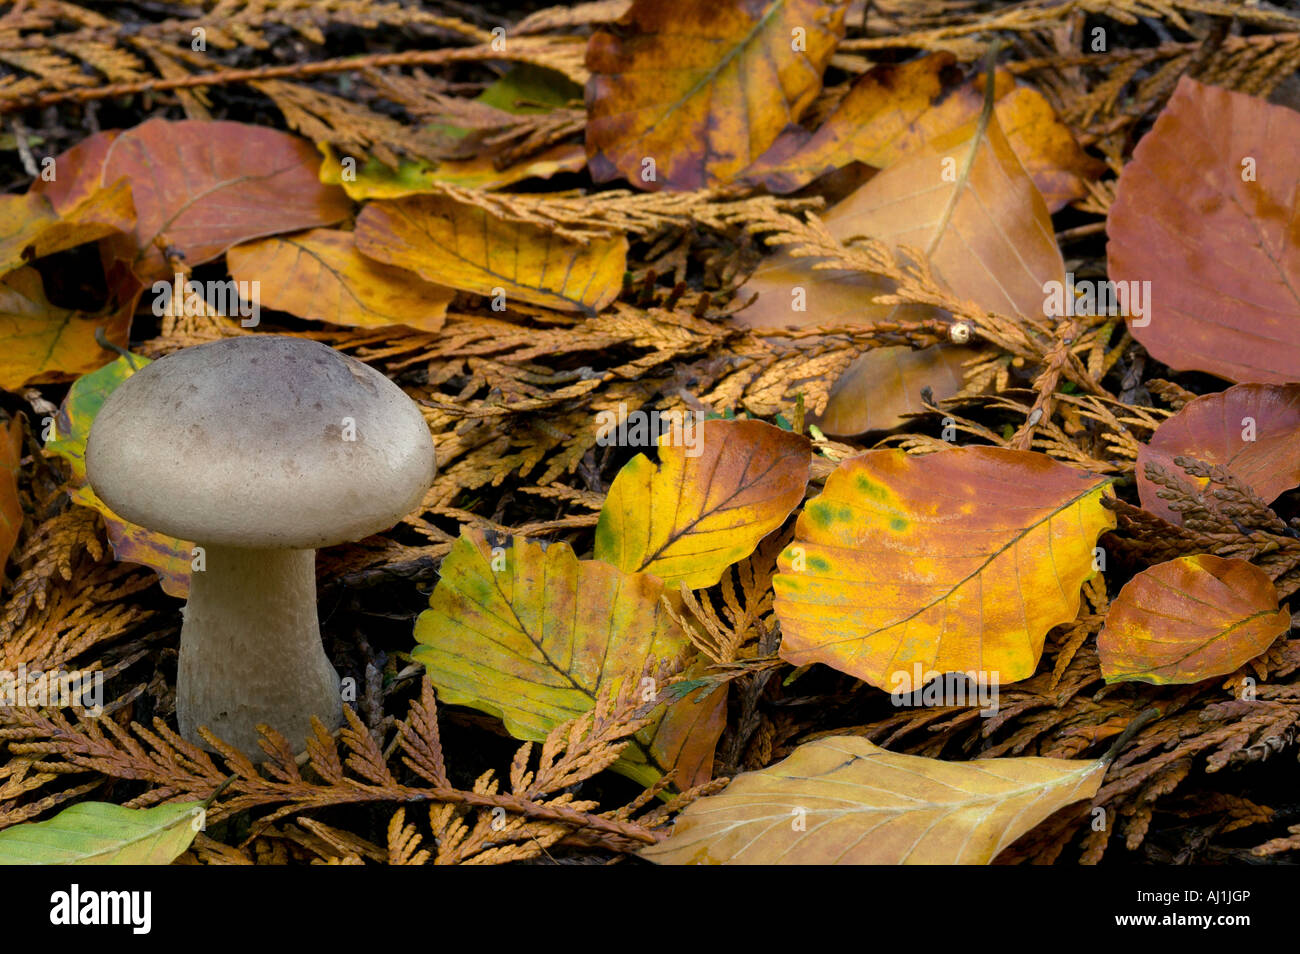 Wild mushroom on a forest floor during autumn Stock Photo